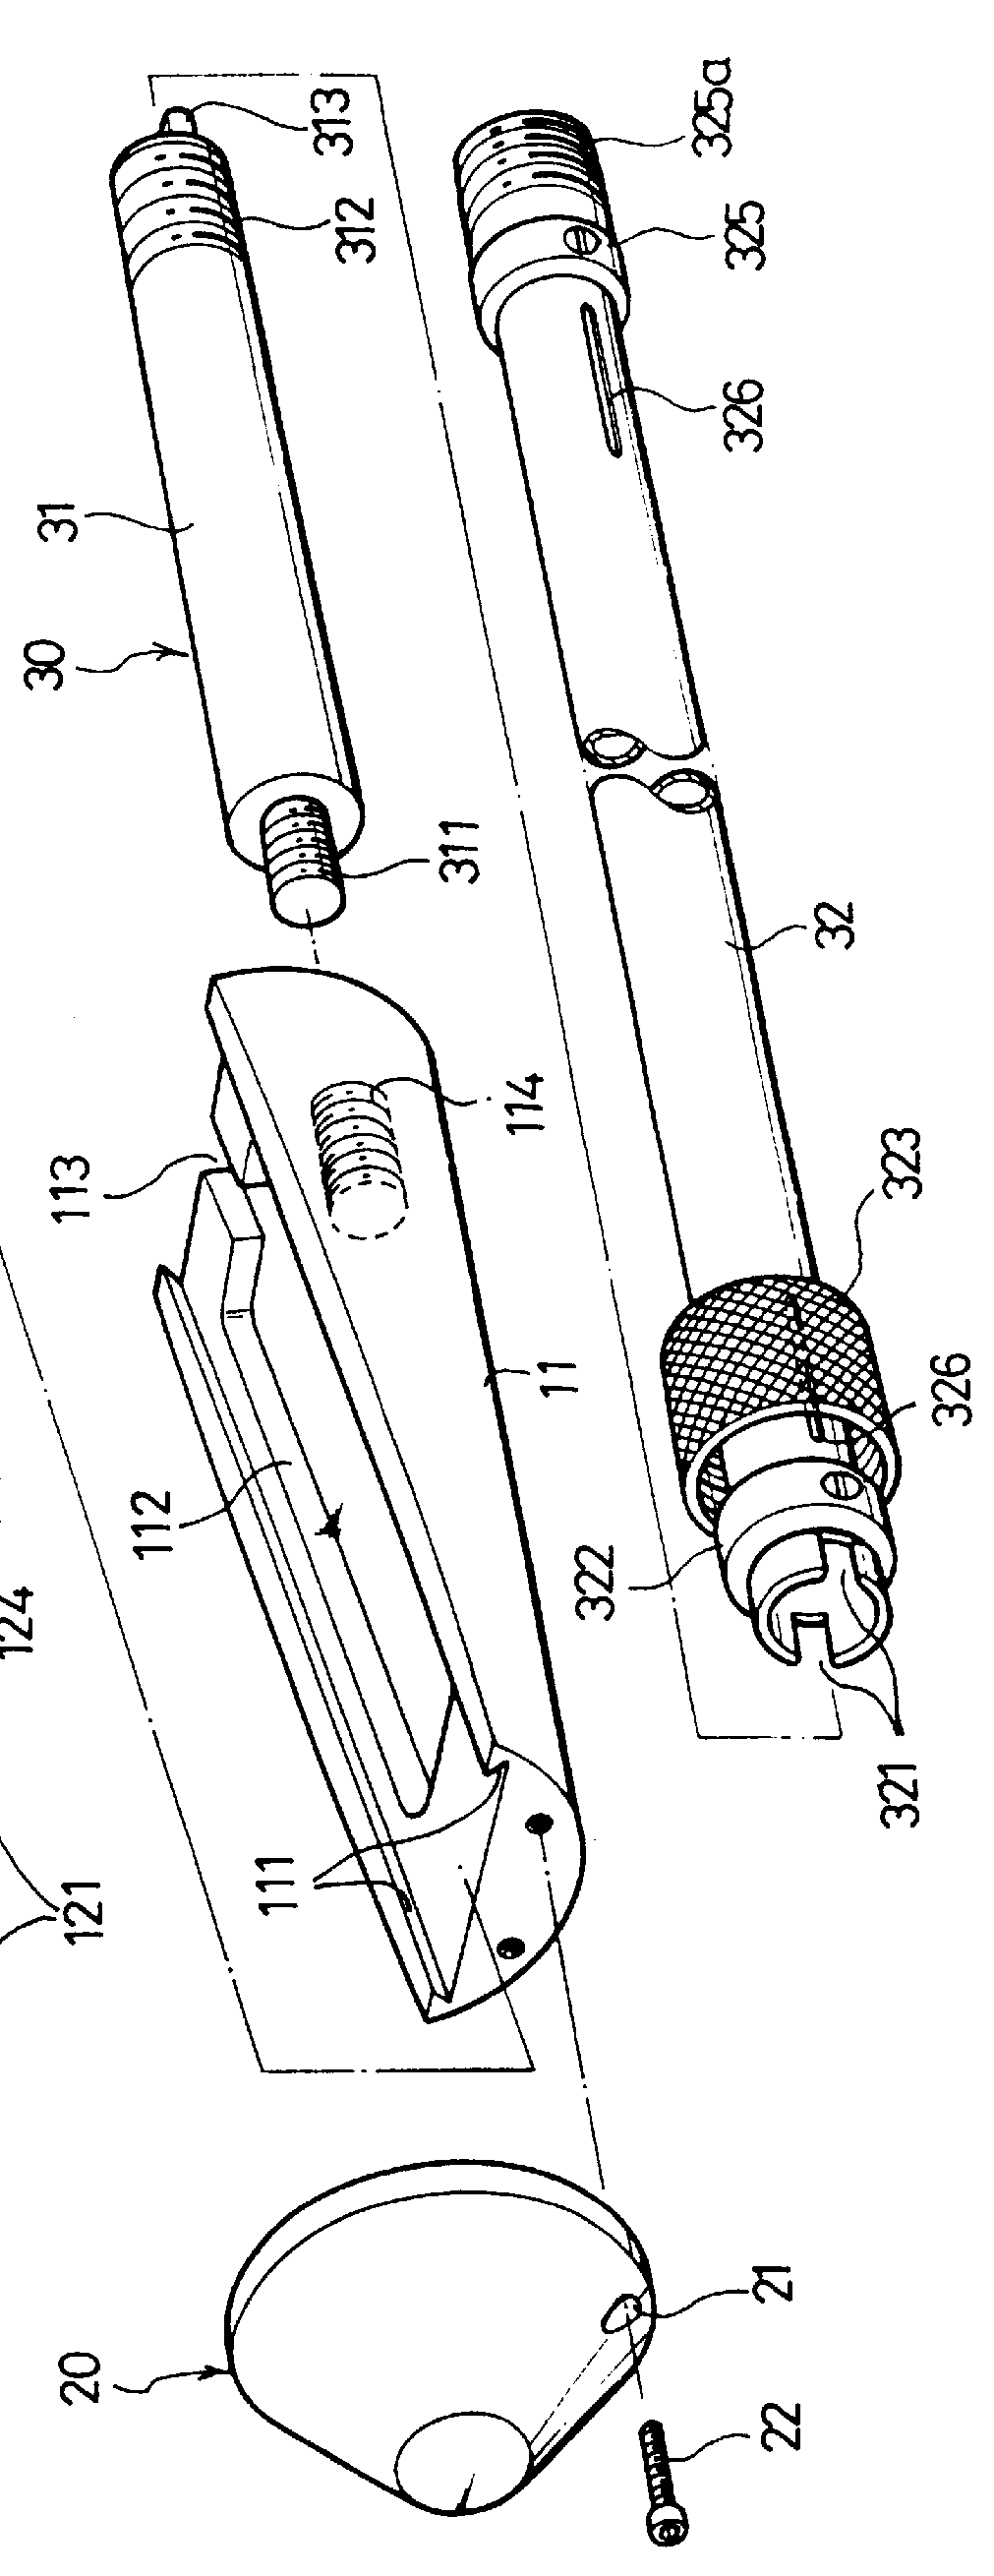 Interpenetration apparatus for meausurement of underground blasting vibration